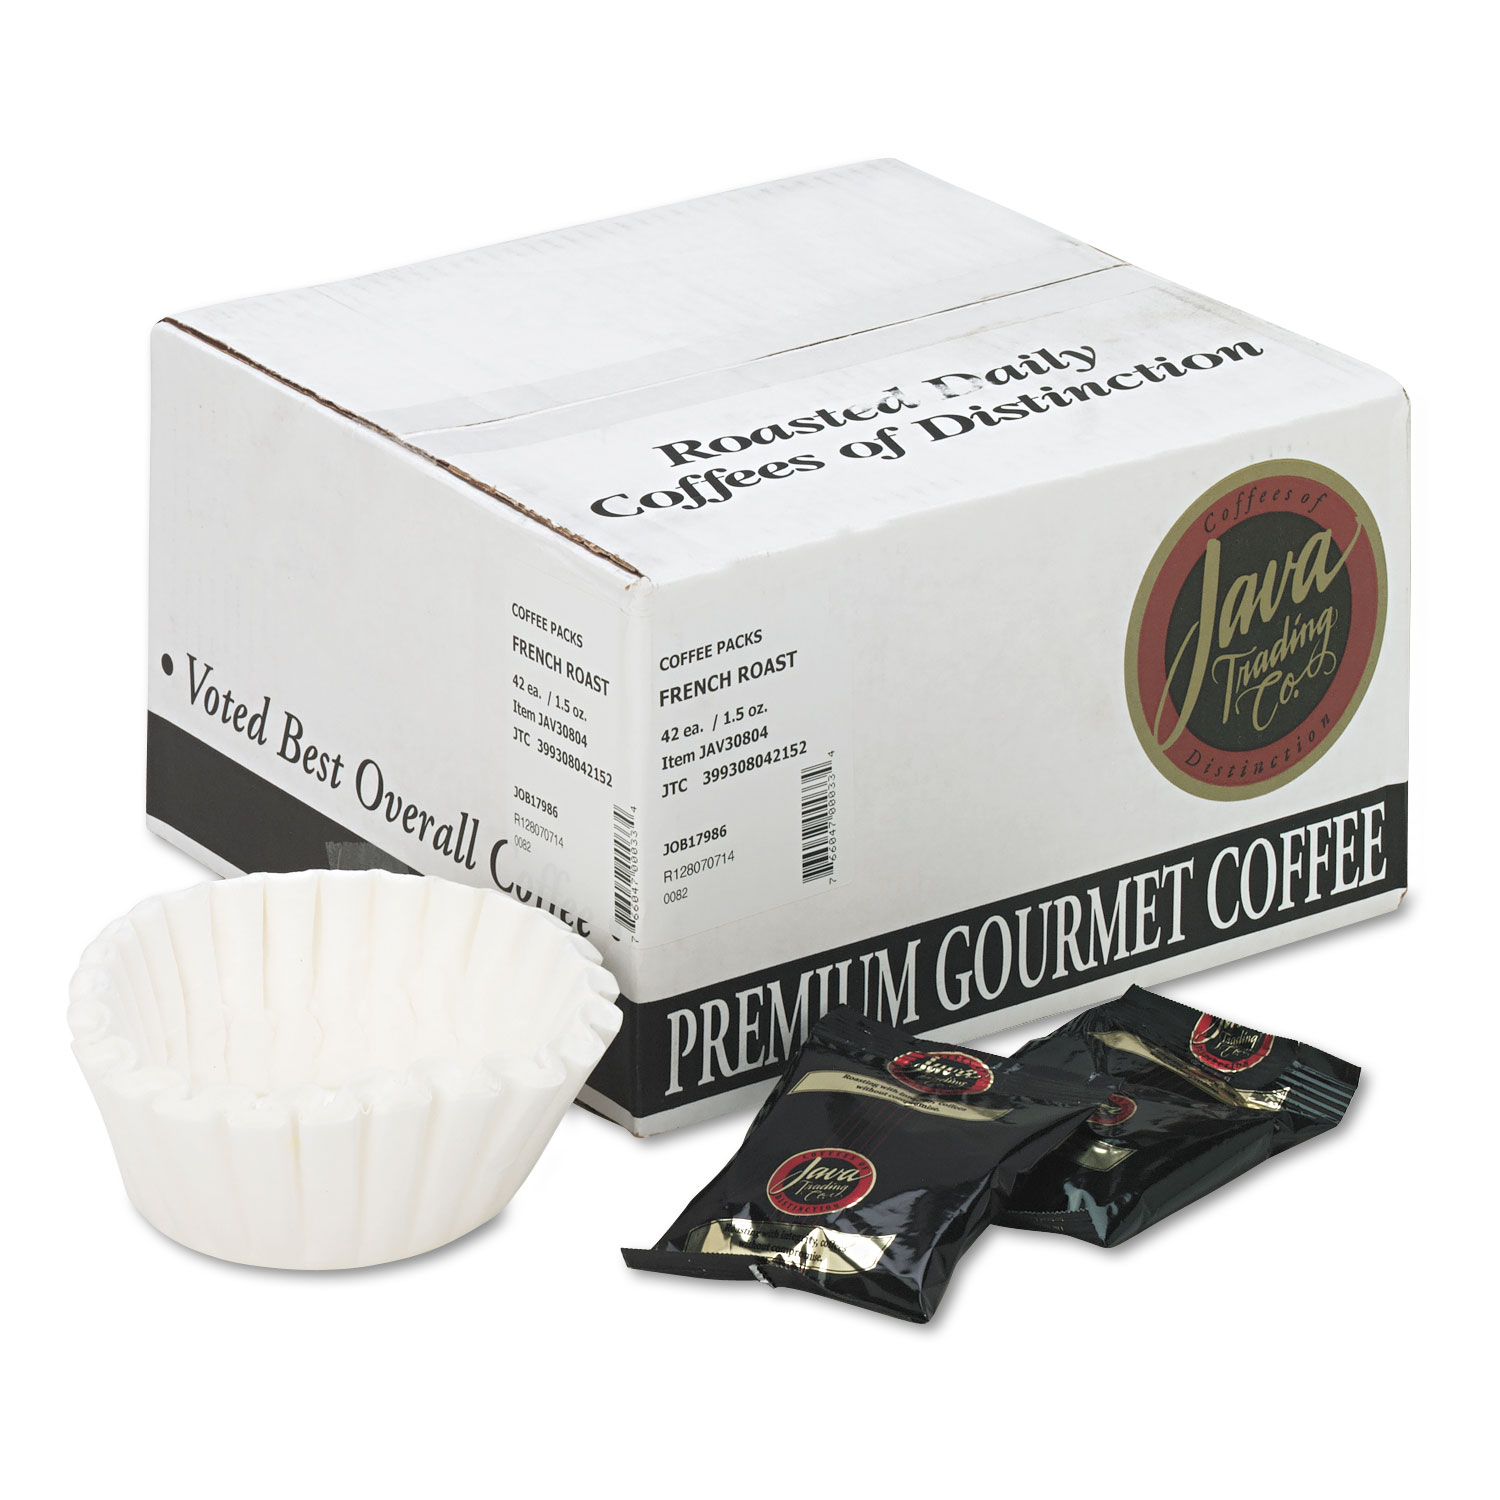  Distant Lands Coffee 399308042151 Coffee Portion Packs, 1.5oz Packs, French Roast, 42/Carton (JAV308042) 